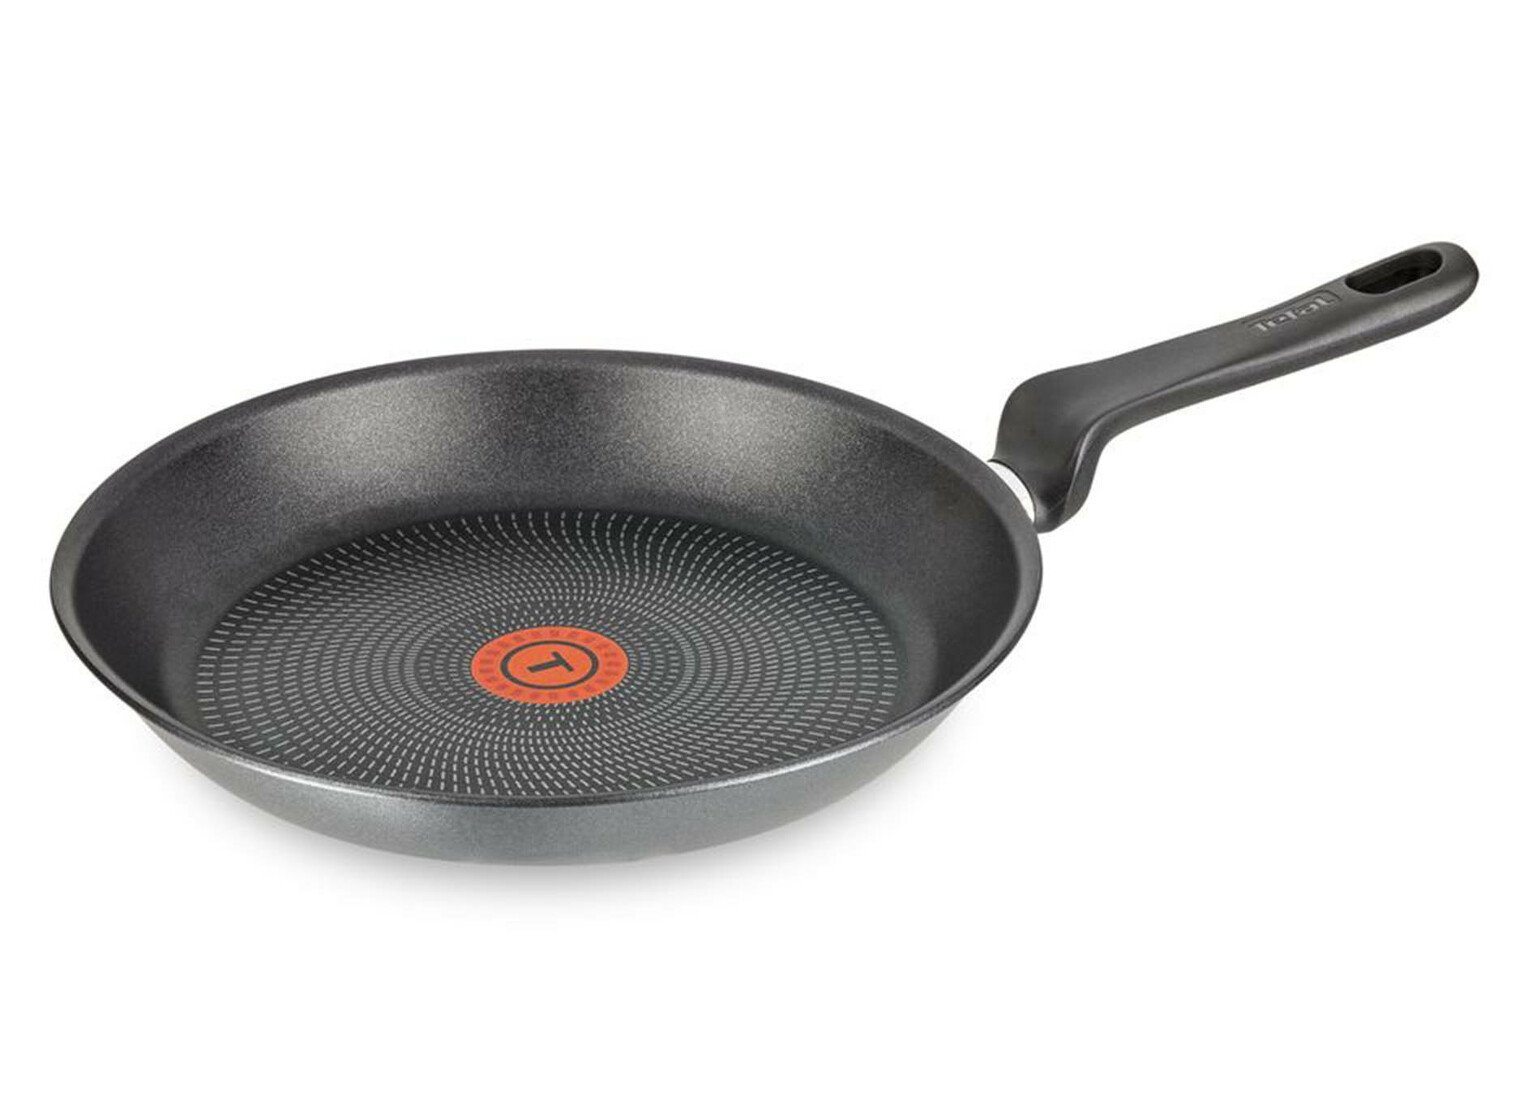 Tefal Simplissima 30cm Non-Stick Frying Pan